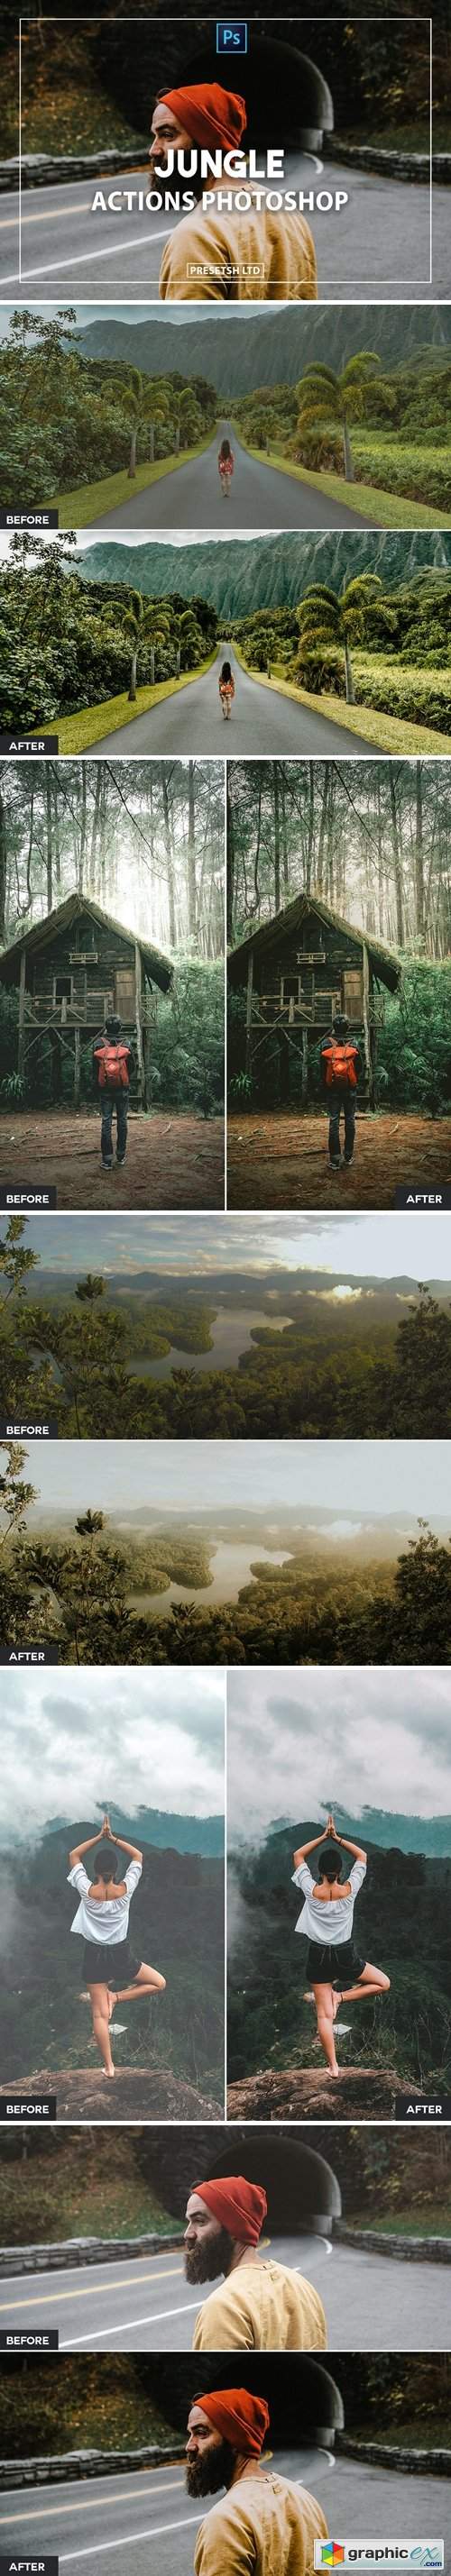  Jungle Photoshop Actions 